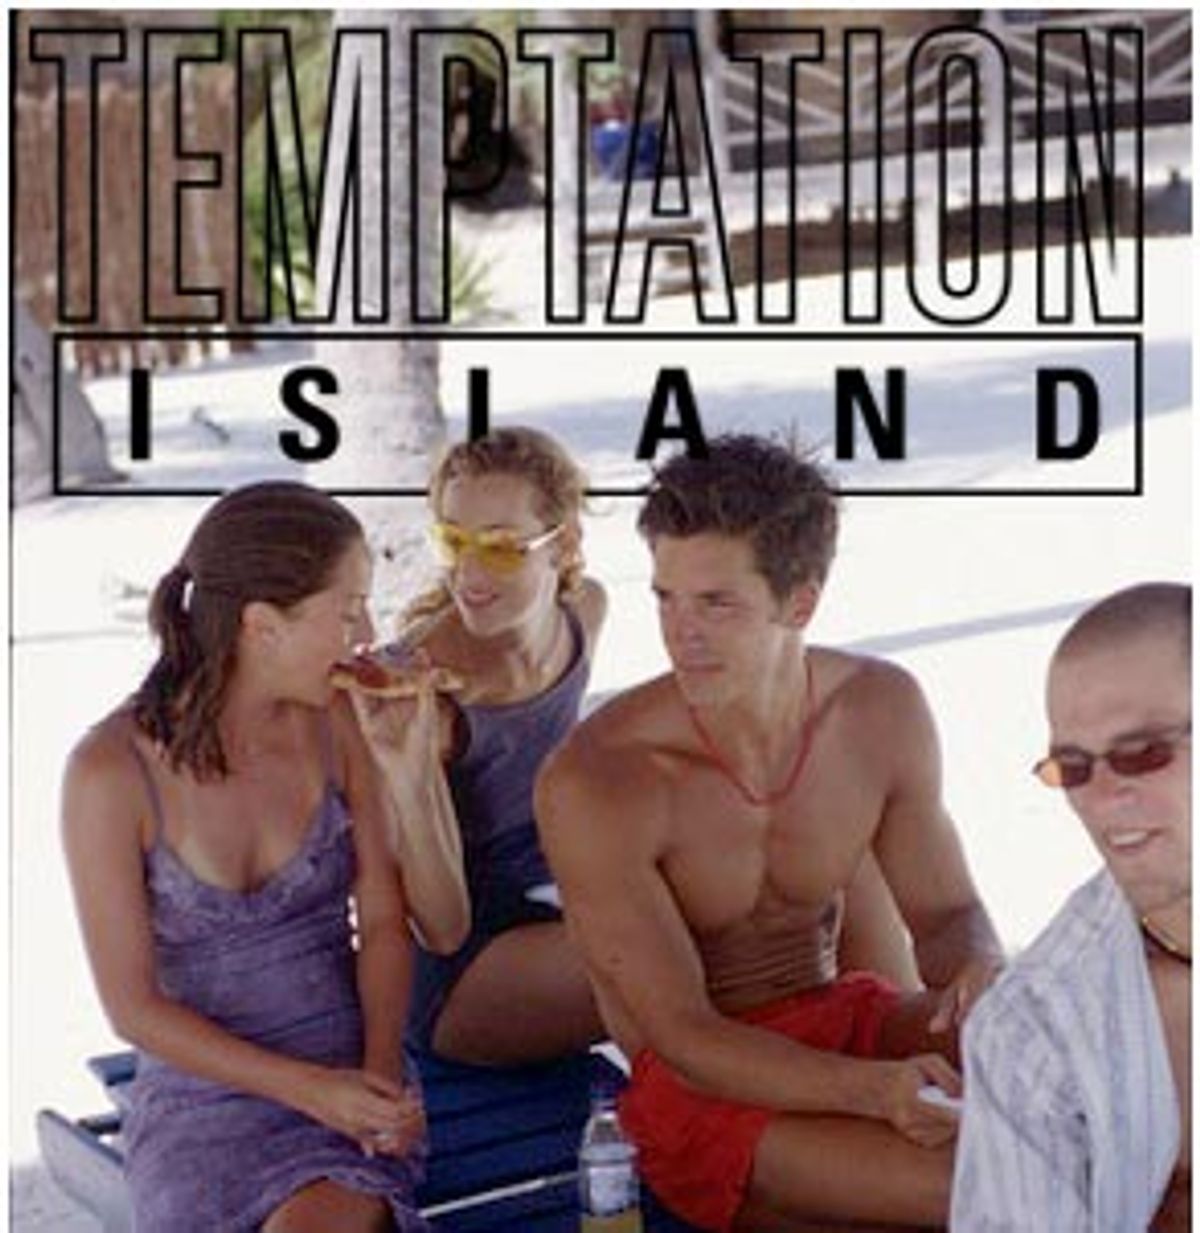 Temptation island naked